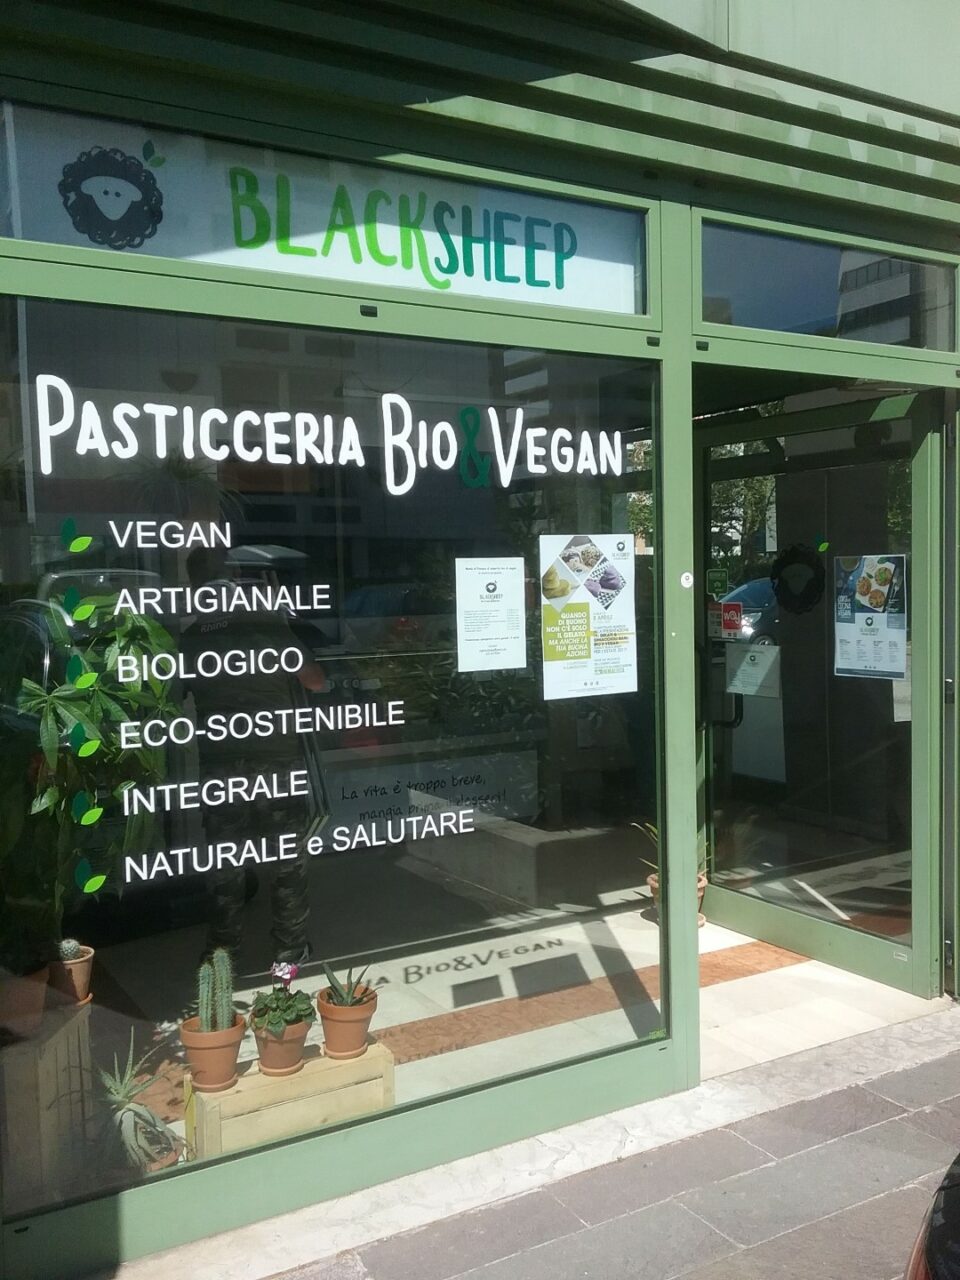 Eticanimalista c/o Black Sheep pasticceria bio vegan - gelati veg 2017 e informazione vegan - 08.04.2017 20170408 133404